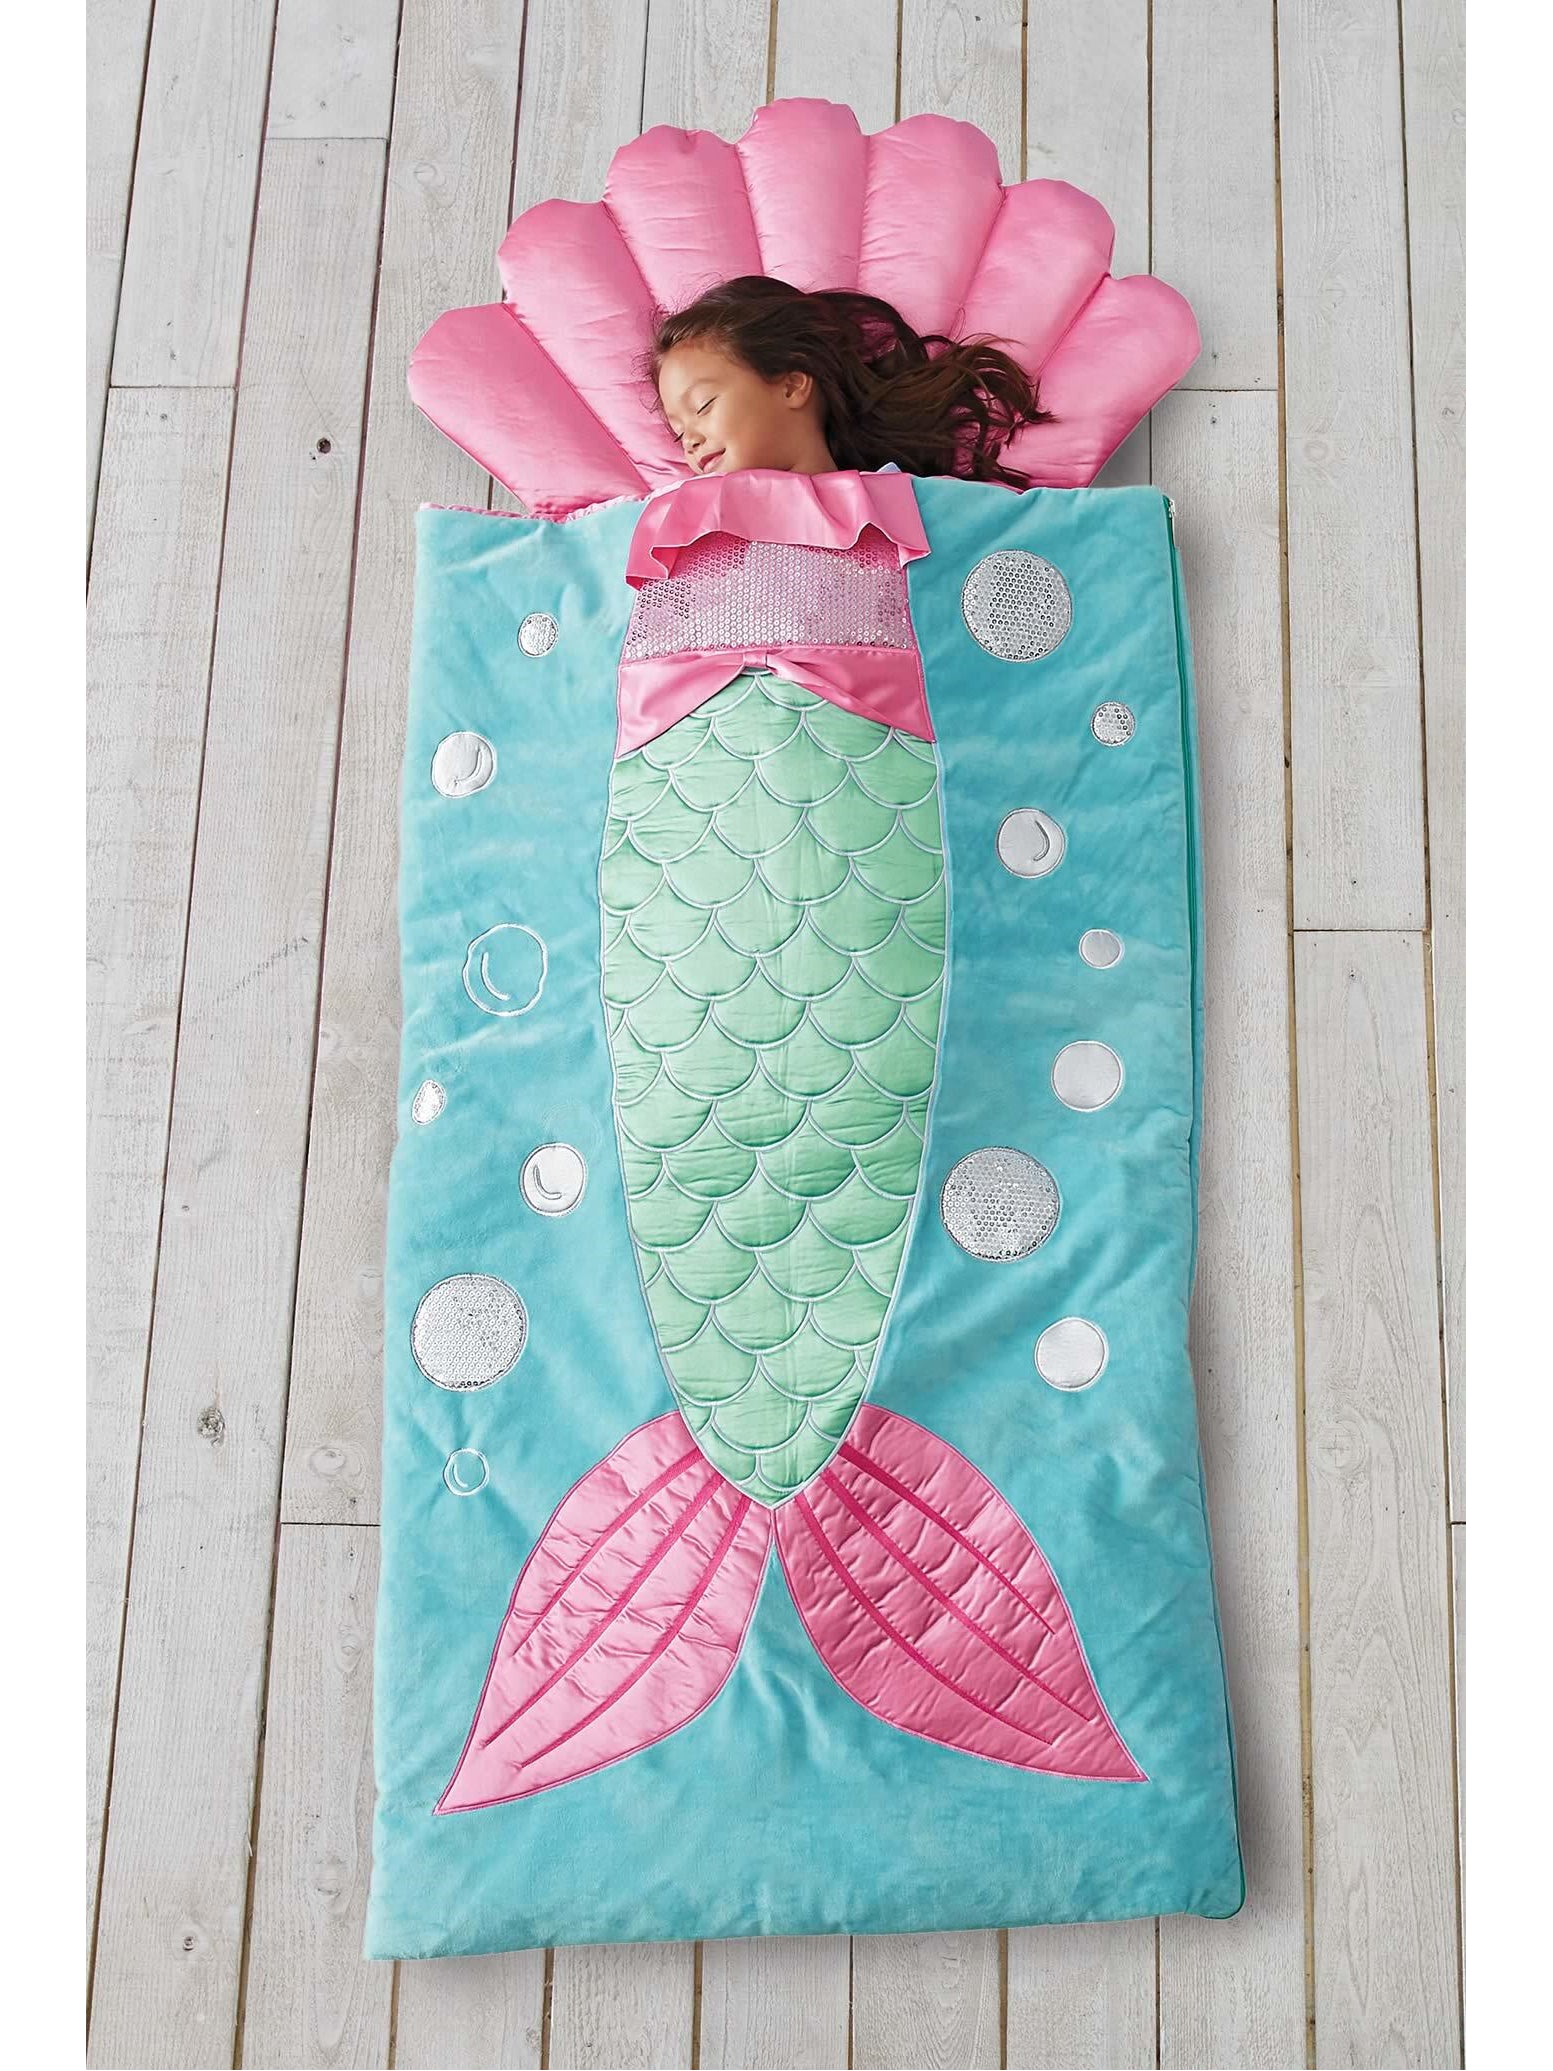 mermaid sleeping bag with pillow